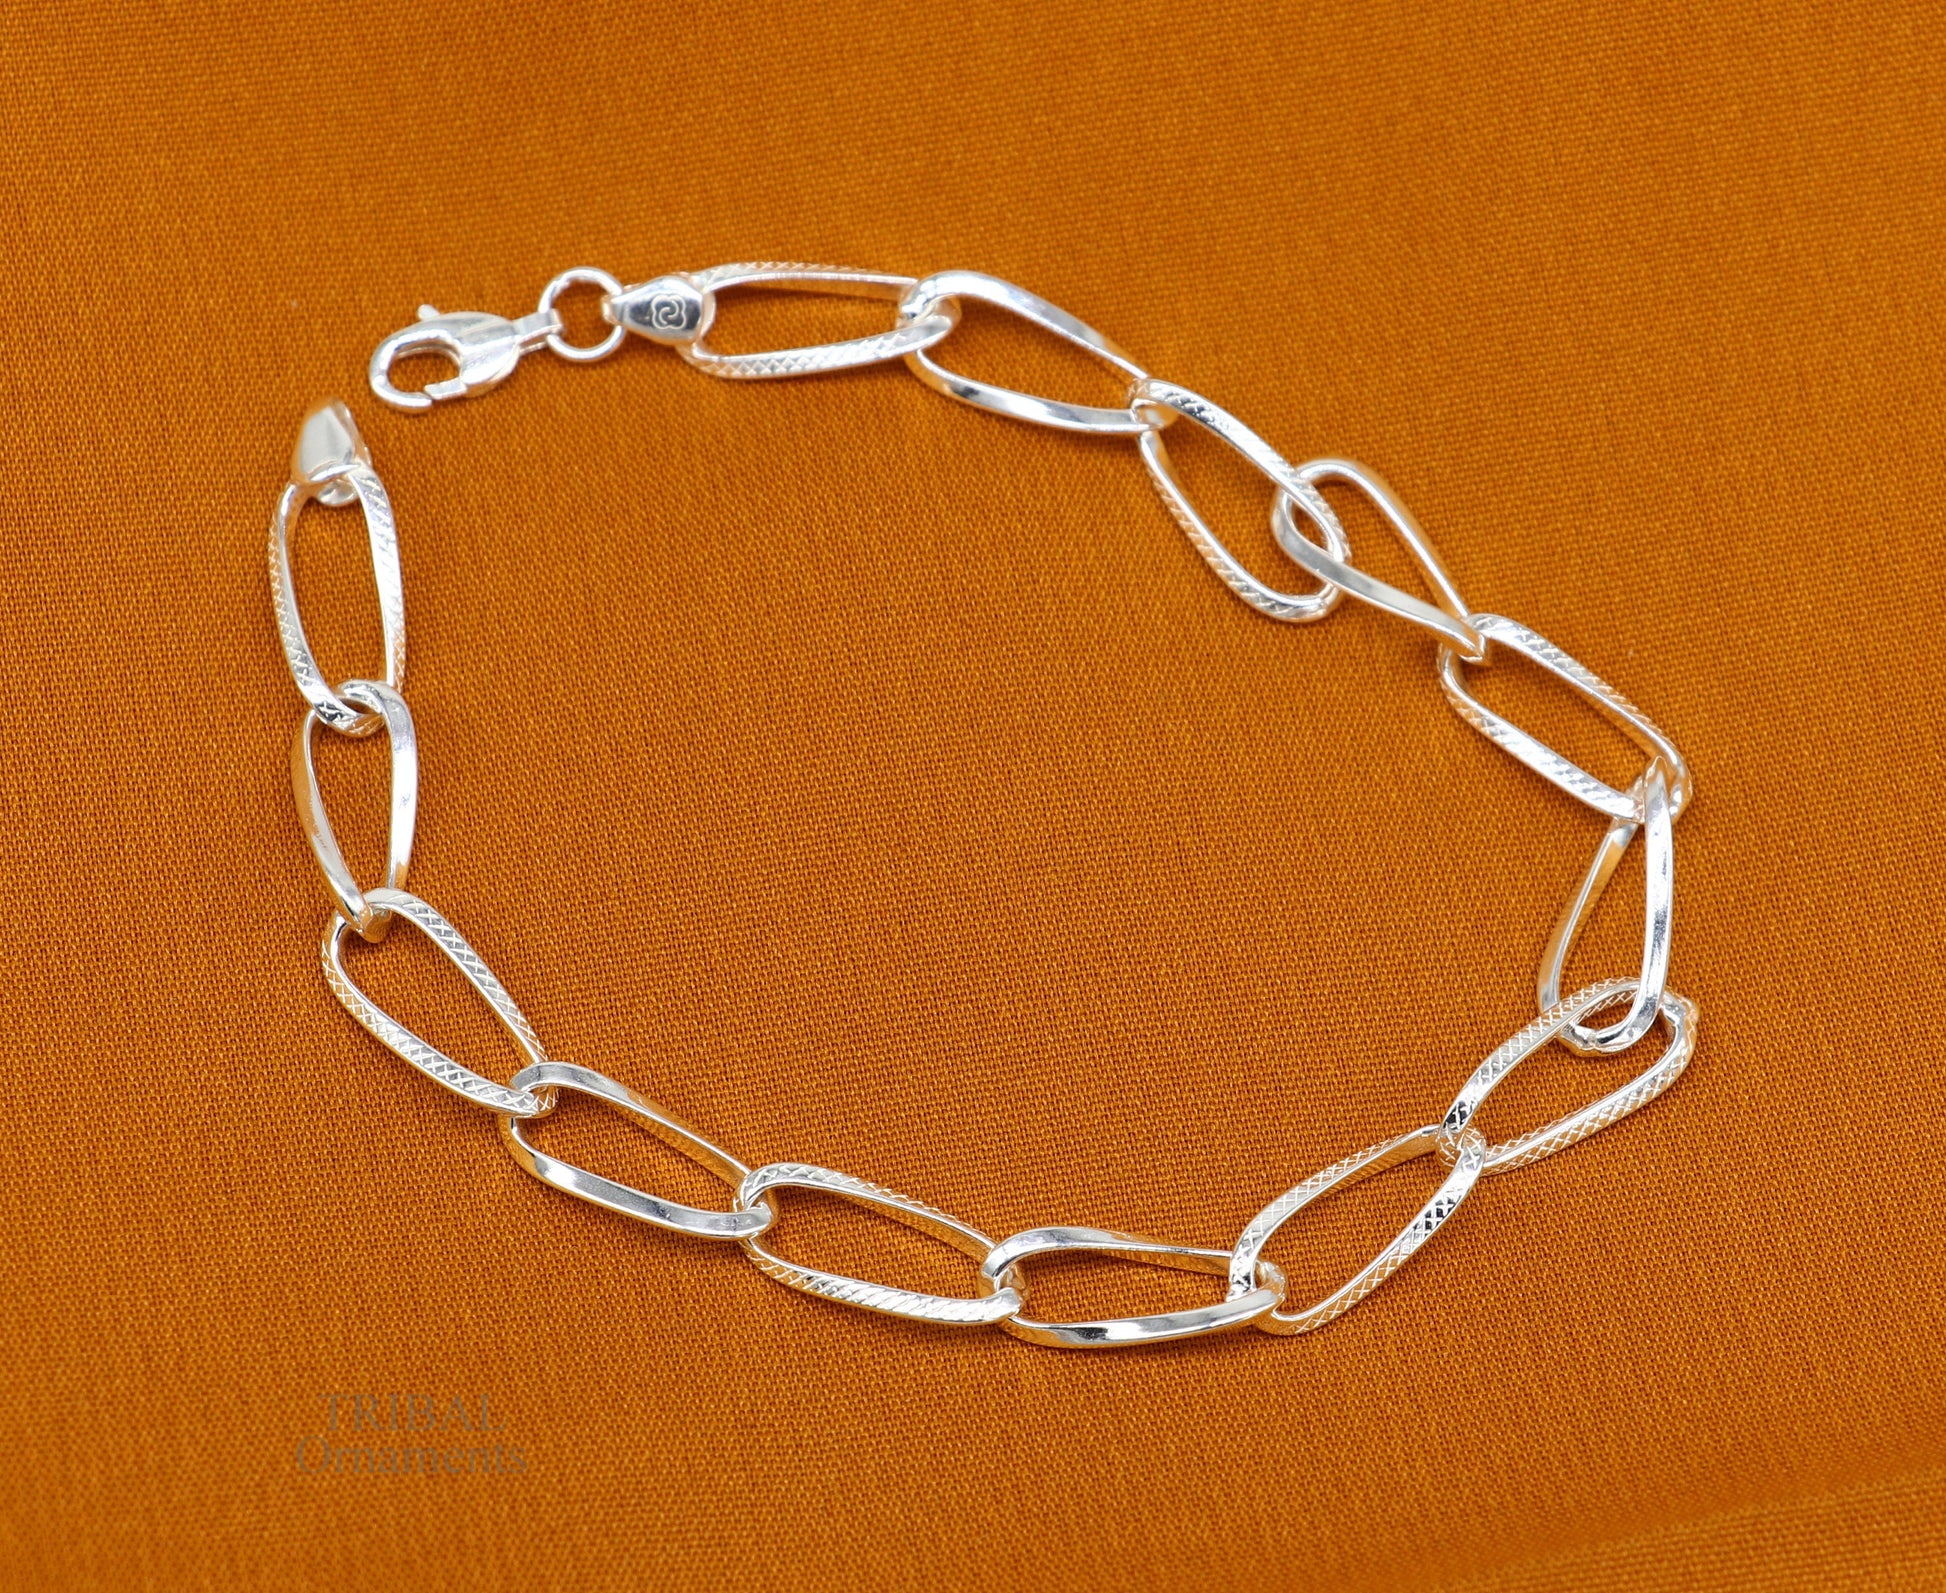 Solid 8mm 925 sterling silver handmade Bracelet, Dainty Silver Bracelet, Chain Bracelet, Minimal Jewelry, Gift For unisex couple nsbr526 - TRIBAL ORNAMENTS